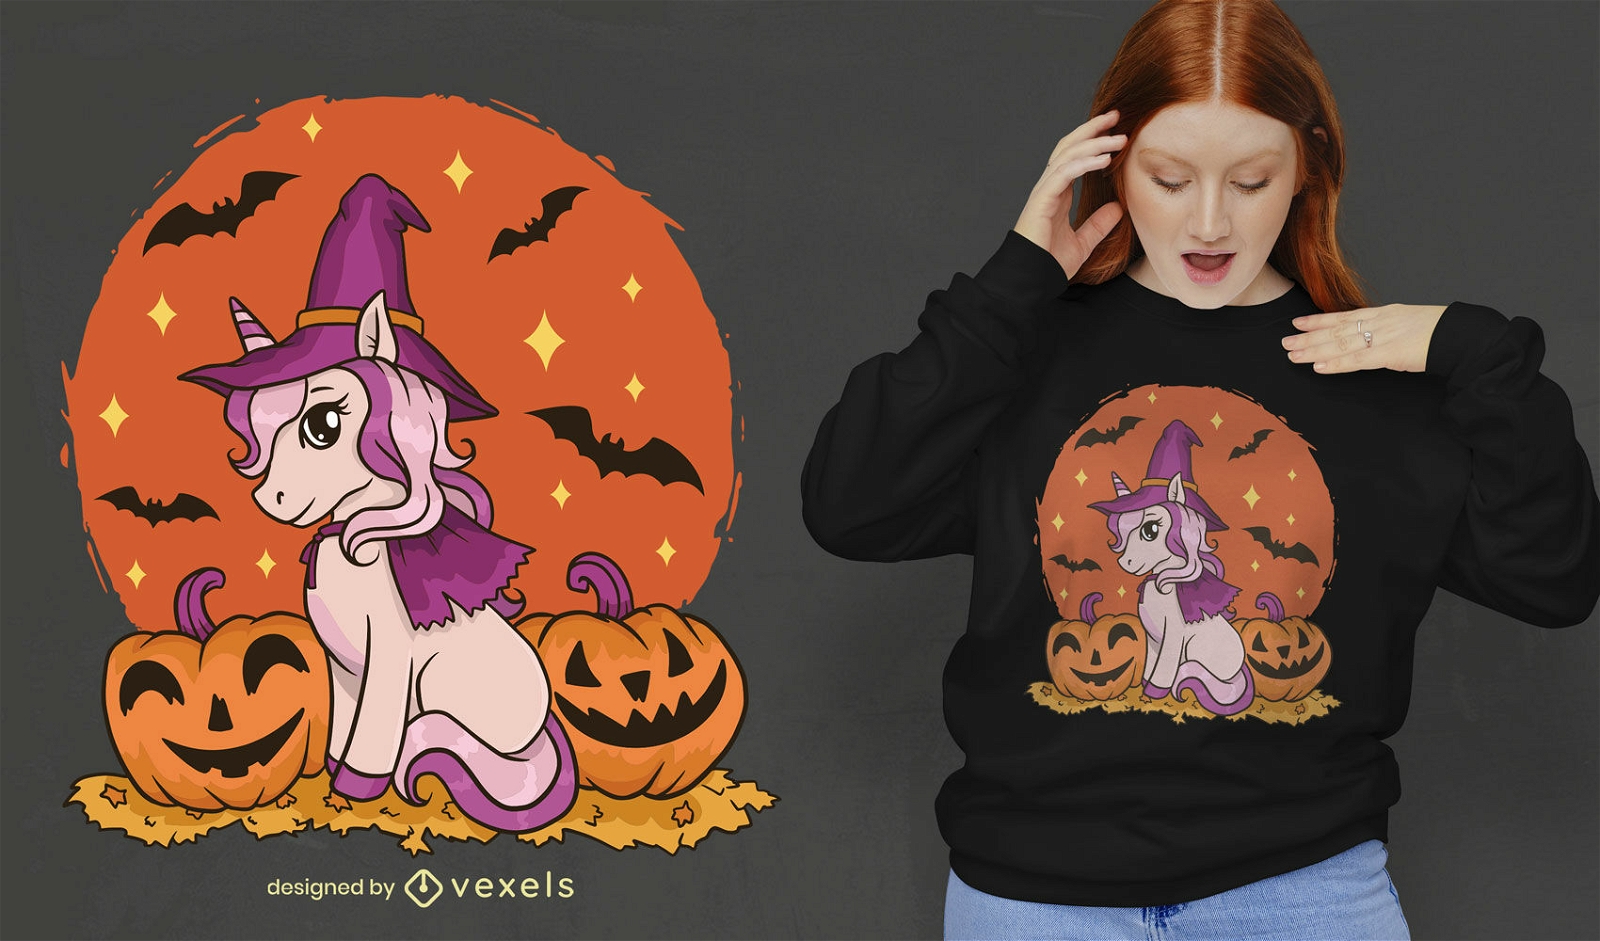 Unicórnio bruxa Hallowen design fofo de camiseta